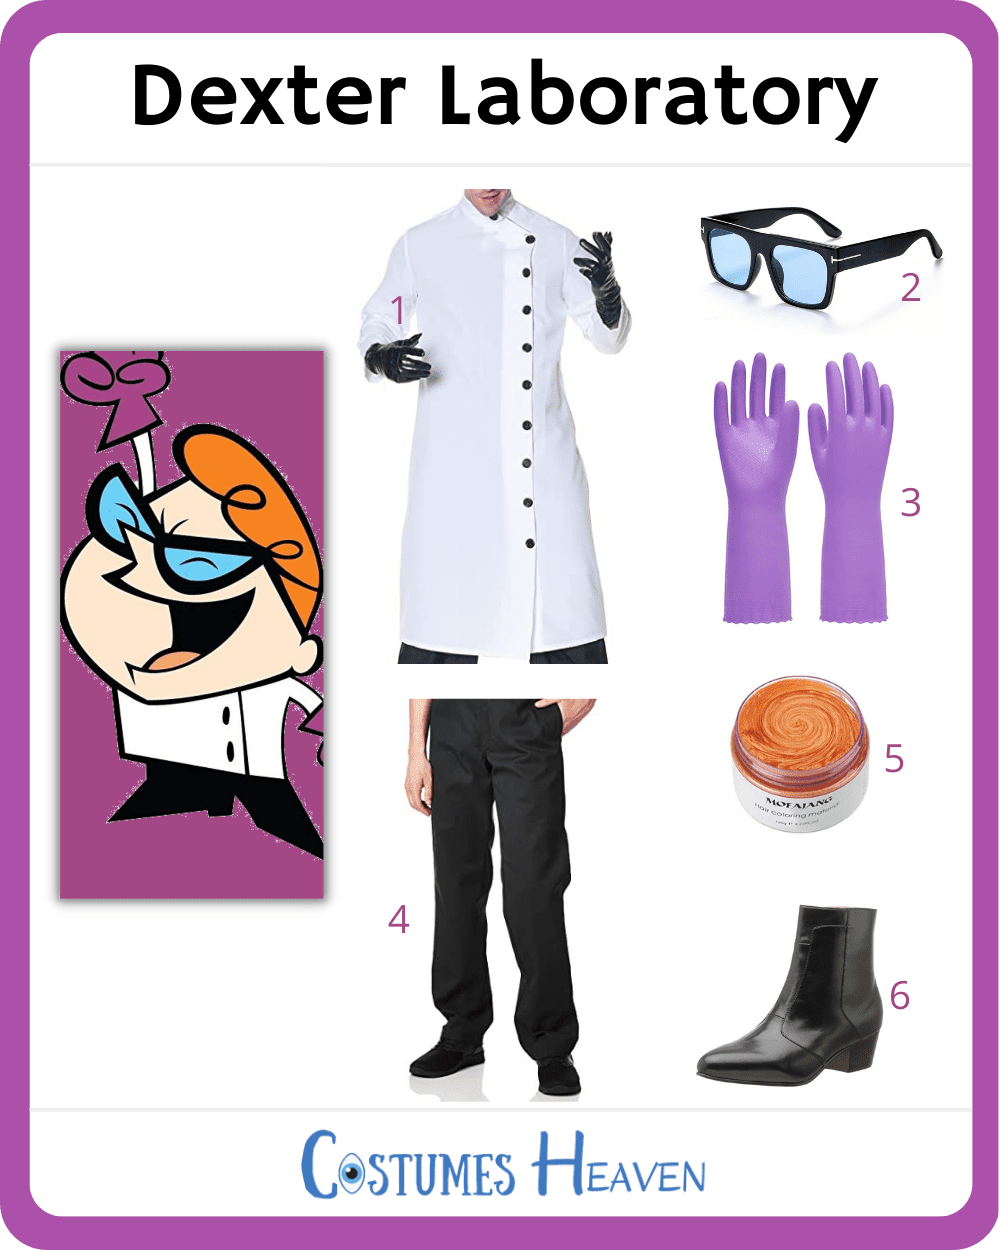 Dexter Laboratory Costume